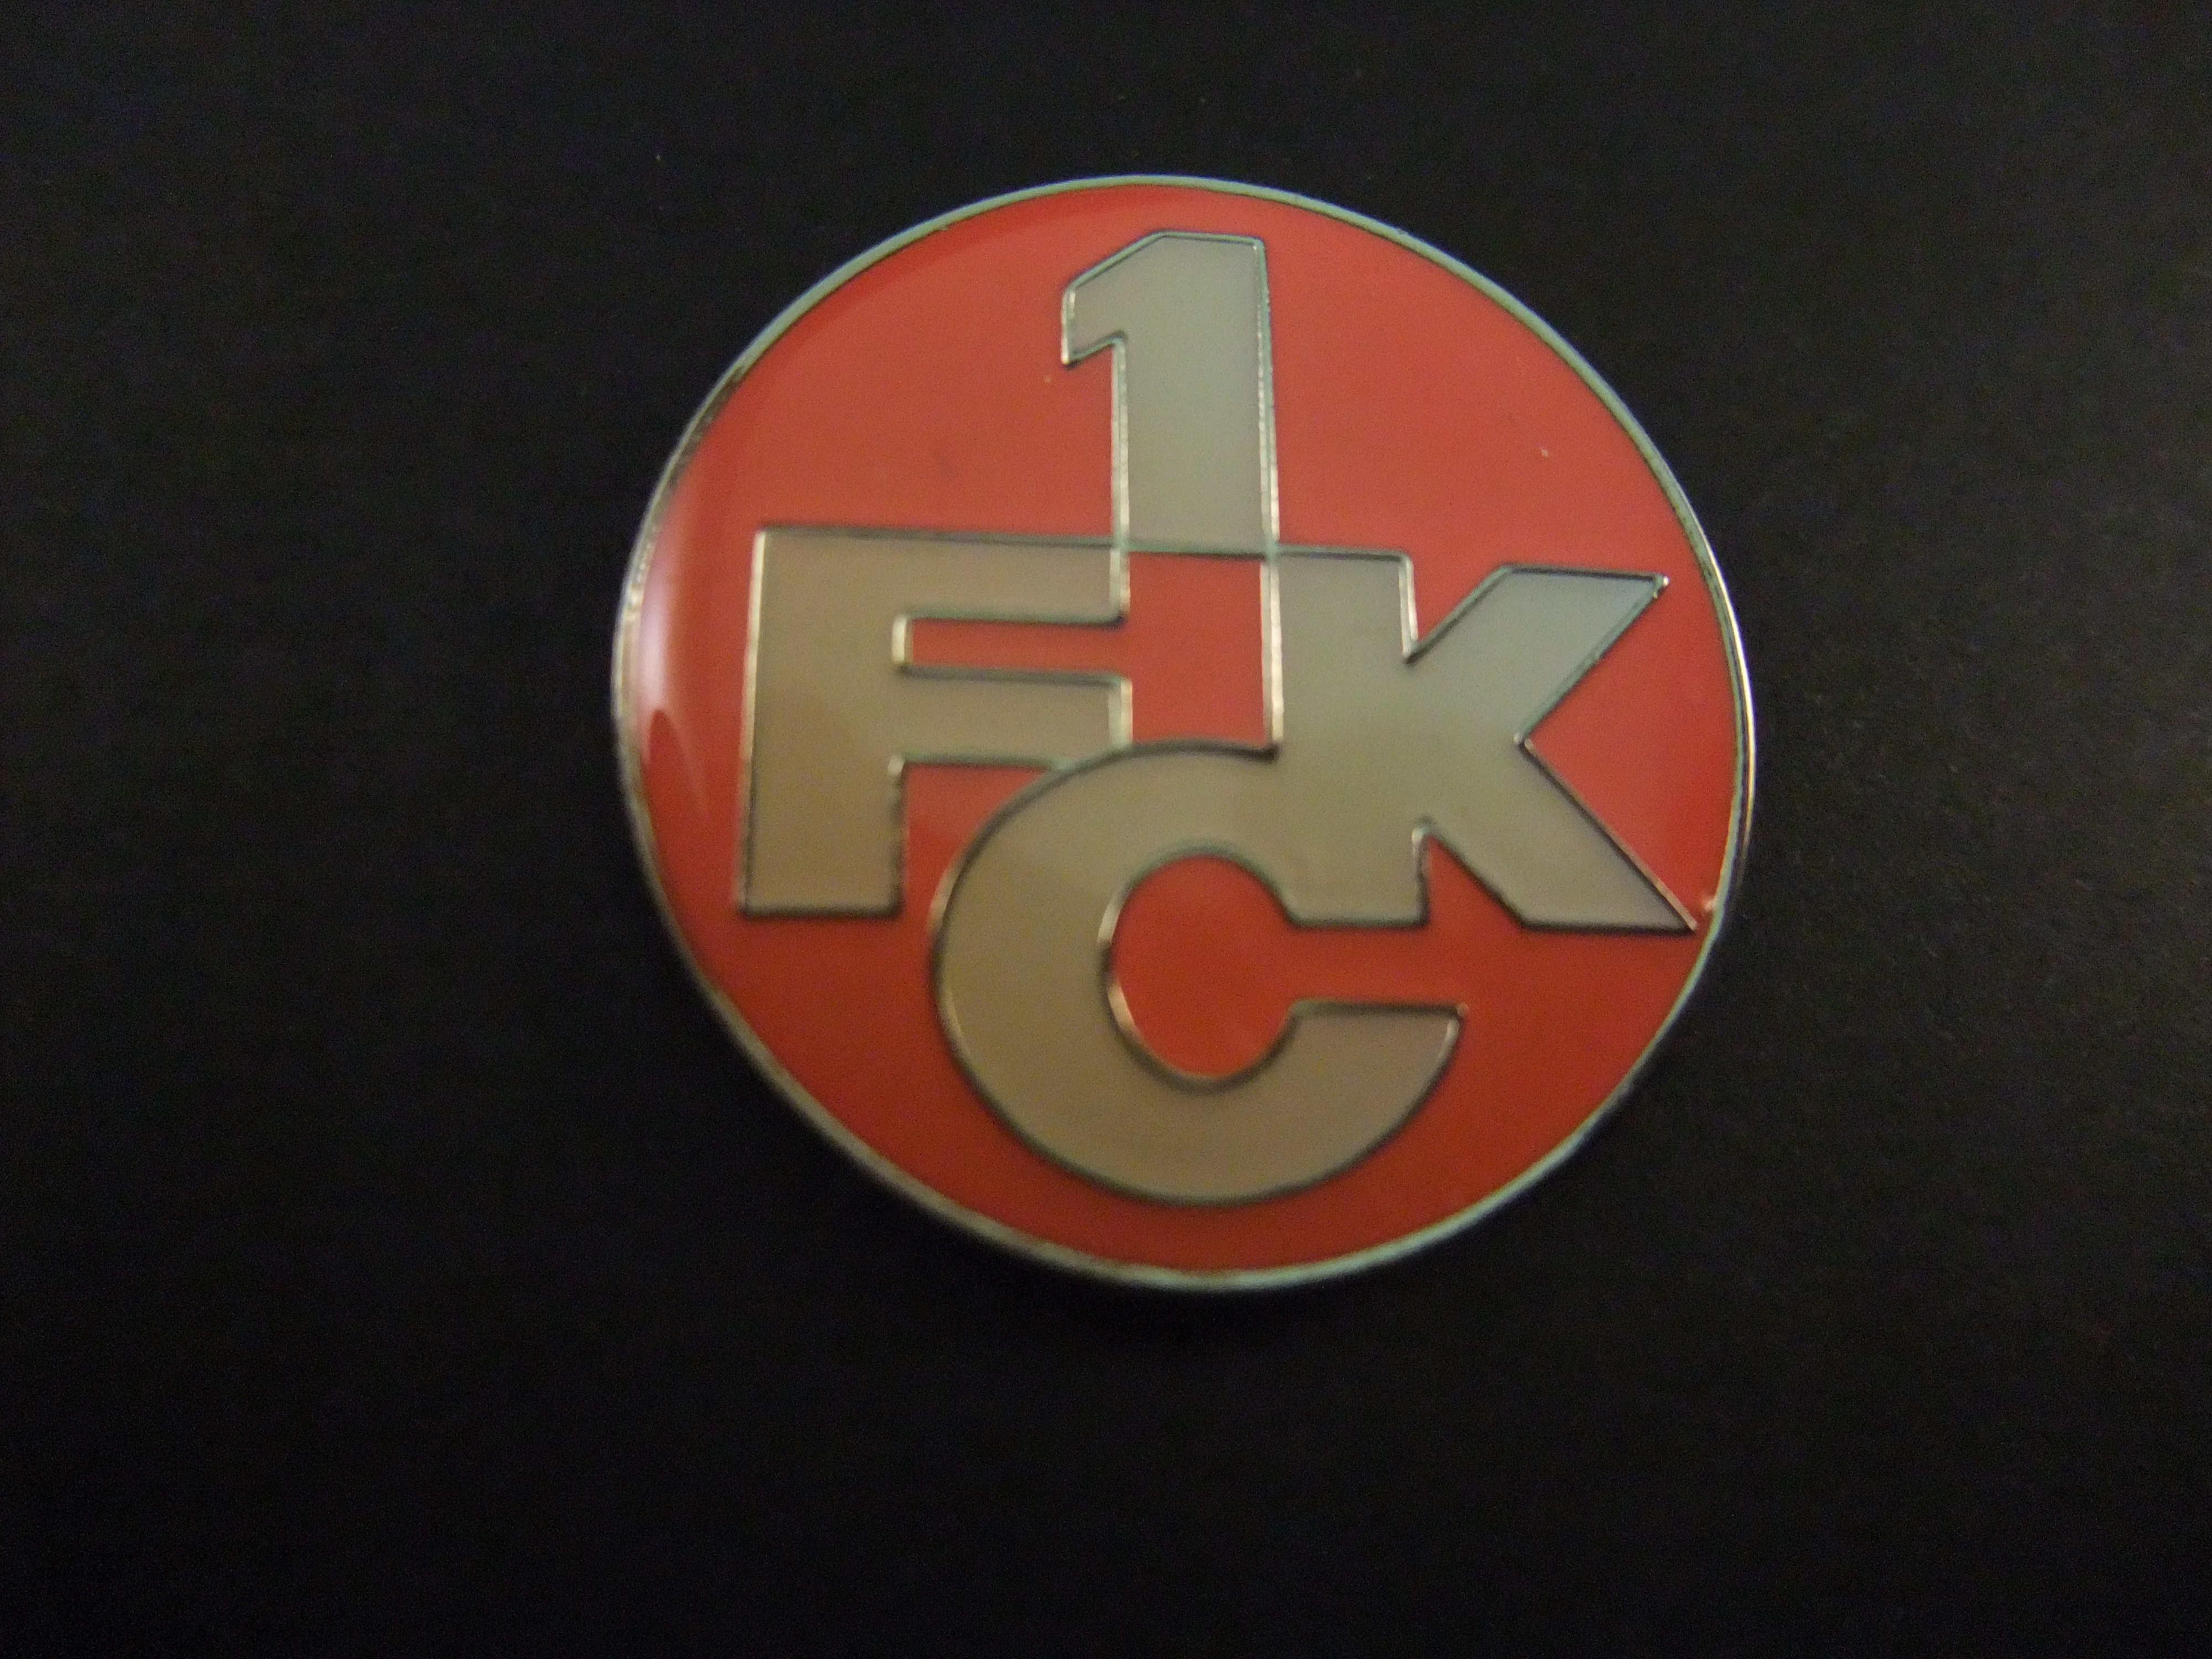 FC Kaiserslautern voetbalclub spelend in de Bundesliga